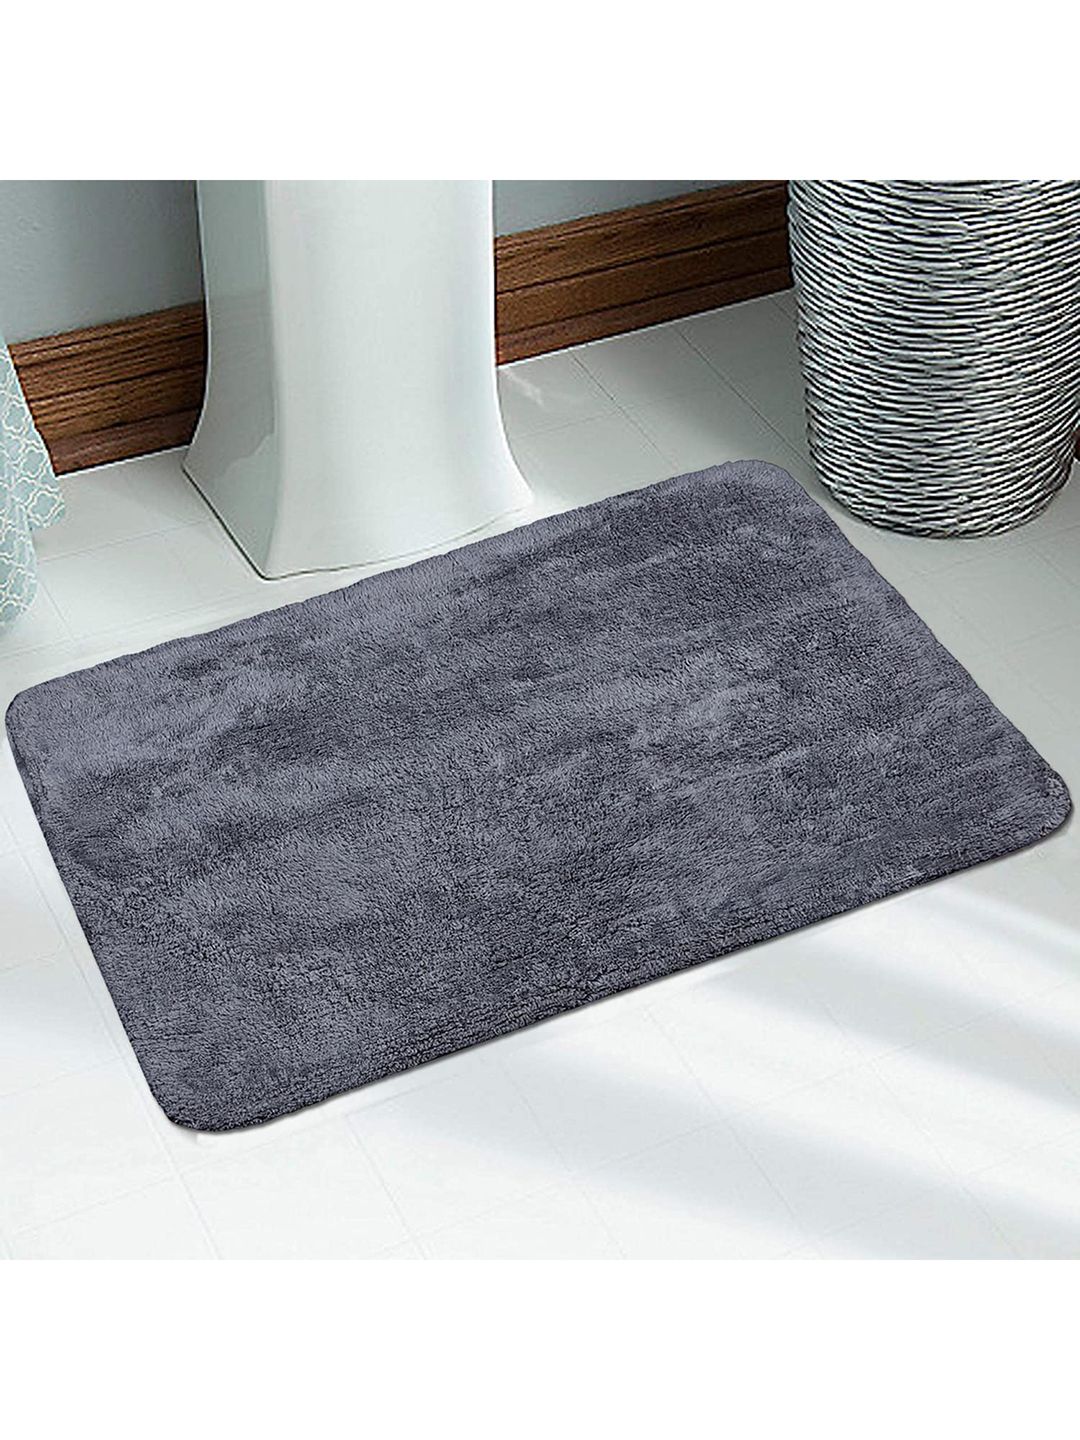 Saral Home Dark Grey 210 GSM Cotton Anti-Skid Bath Rug Price in India